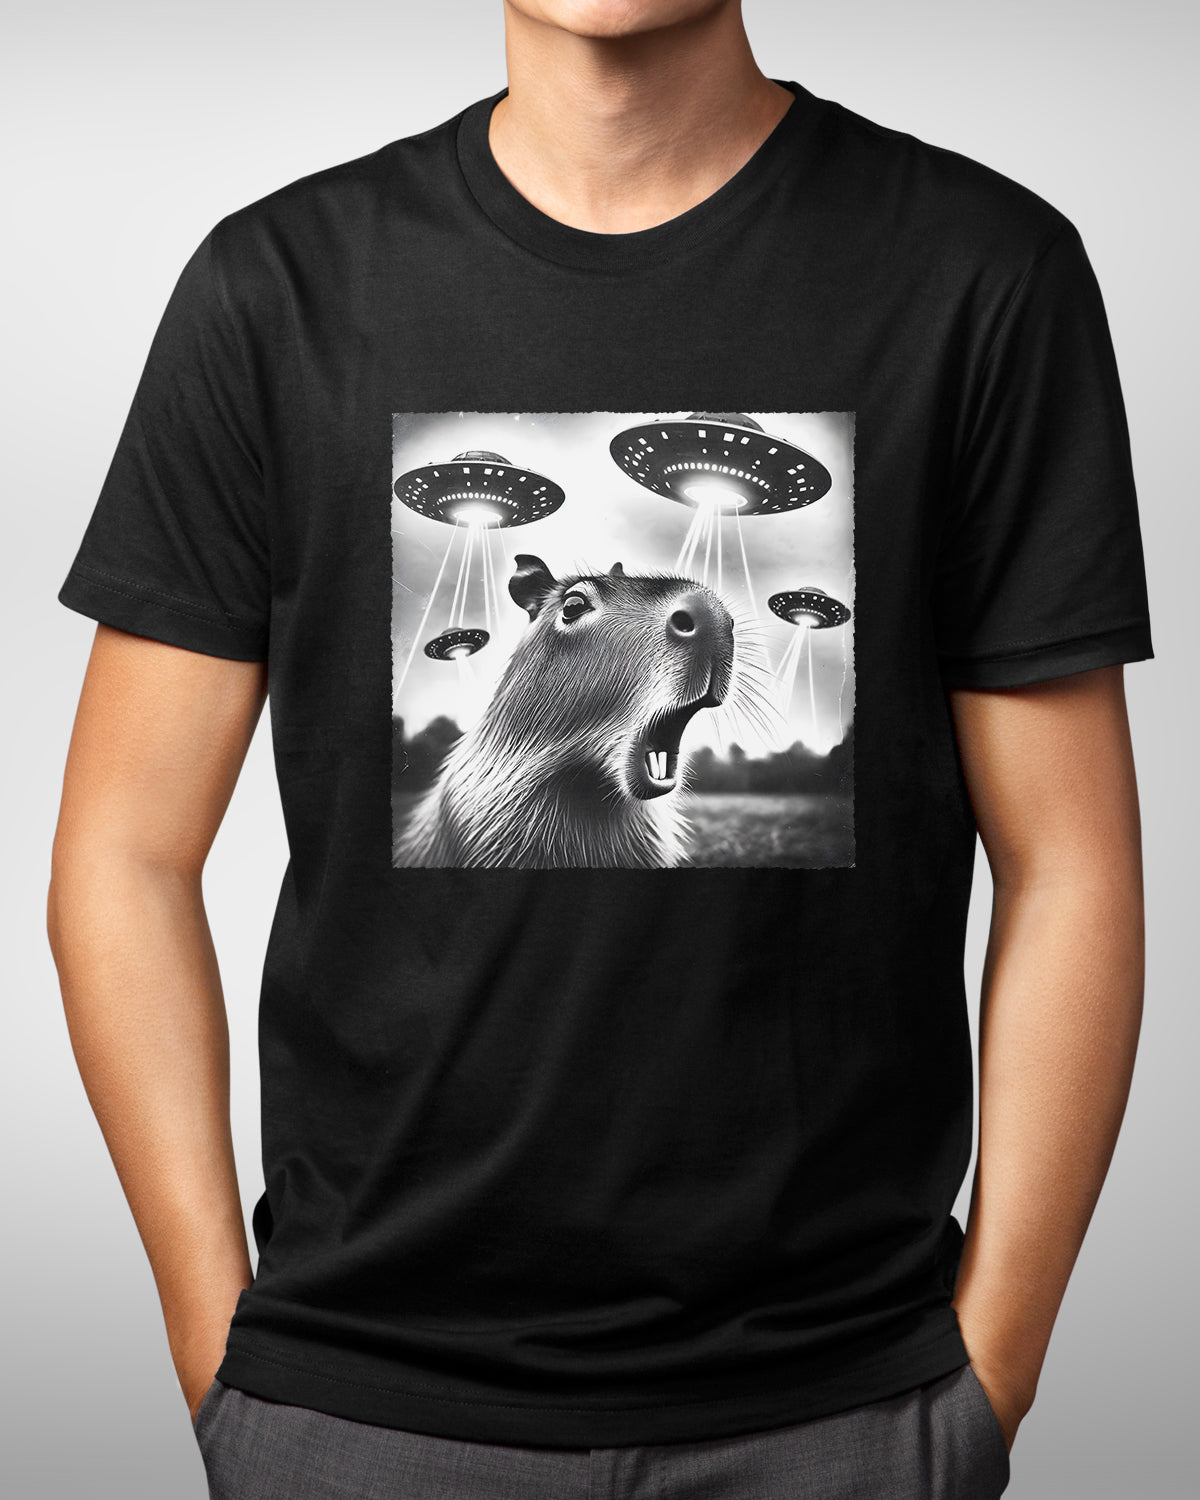 Funny Capybara UFO Shirt - Alien Spaceship & Selfie Invasion Tee for Space Humor Fans